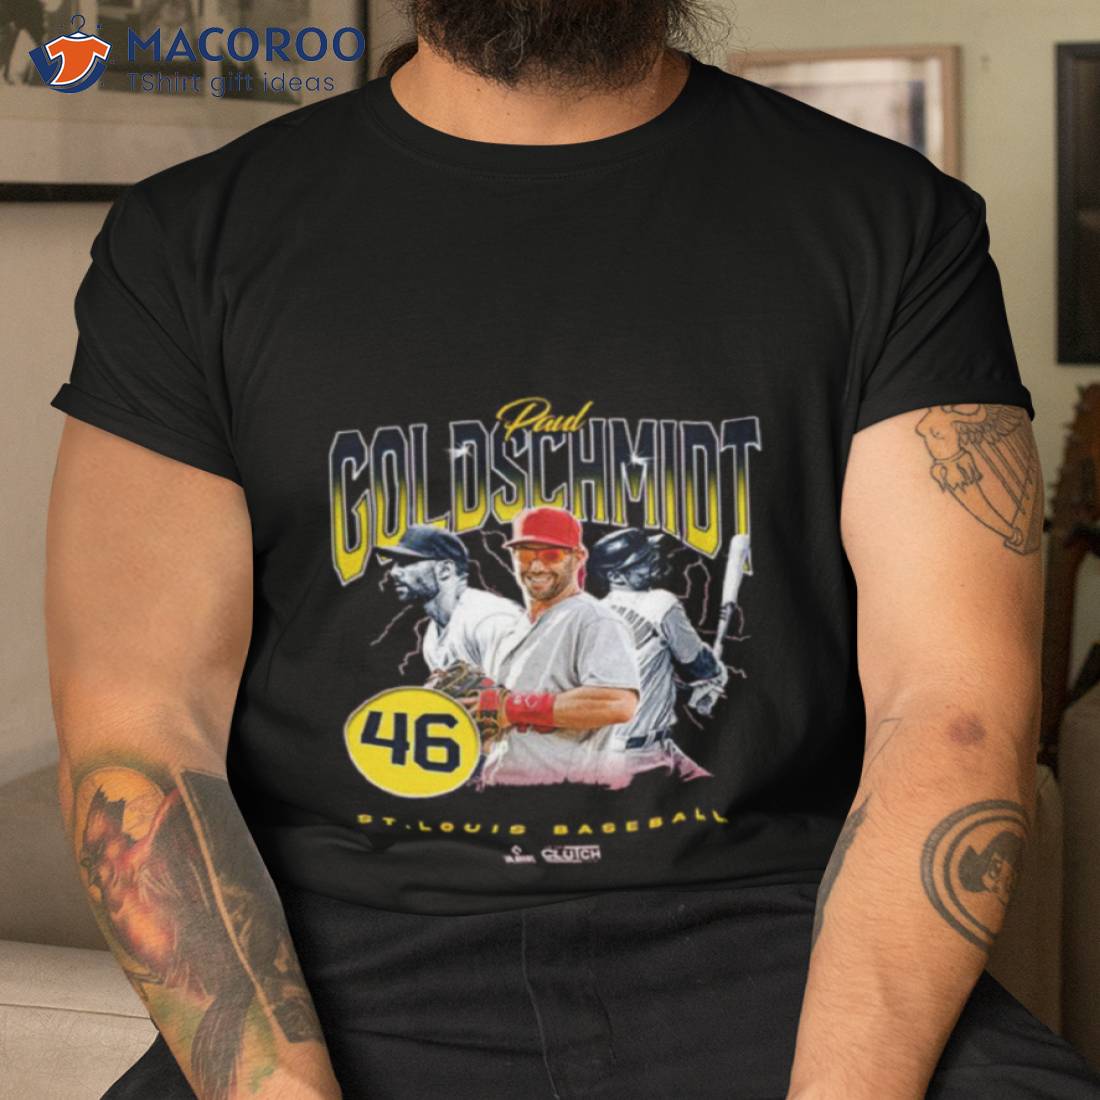 Paul Goldschmidt Retro 90s Shirt